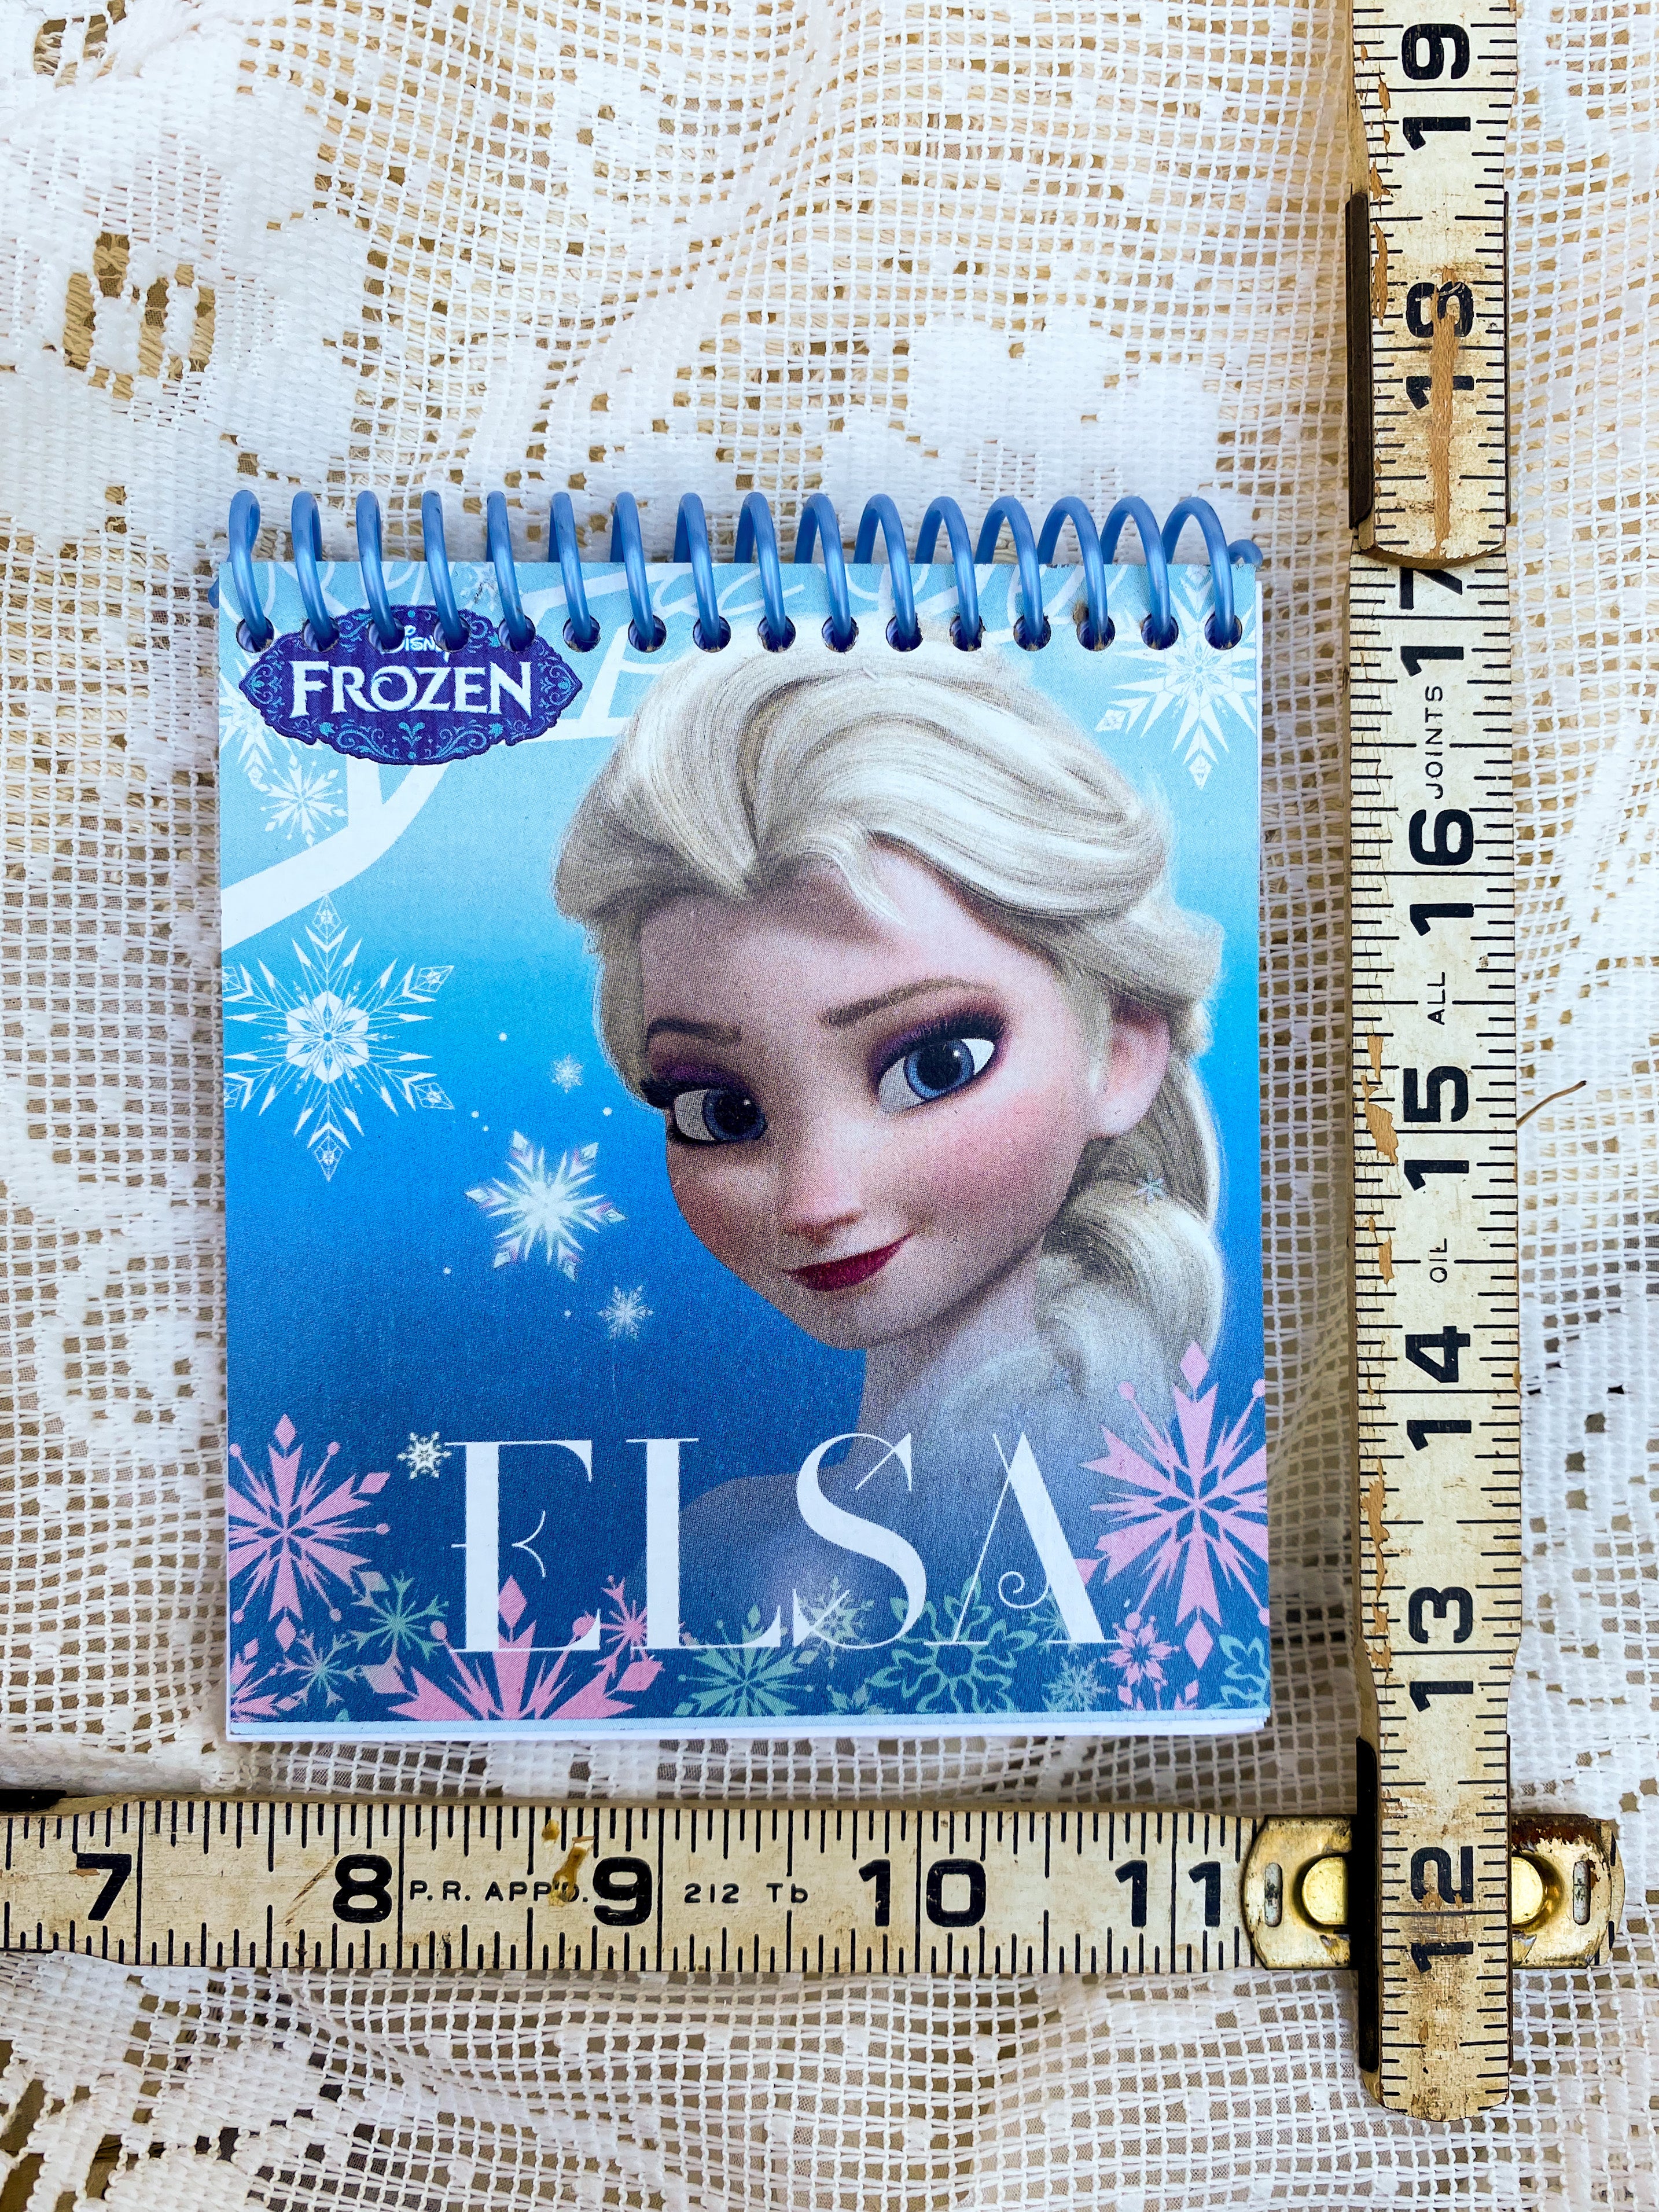 Disney’s Frozen - Elsa Recycled Kleenex Box Notebook